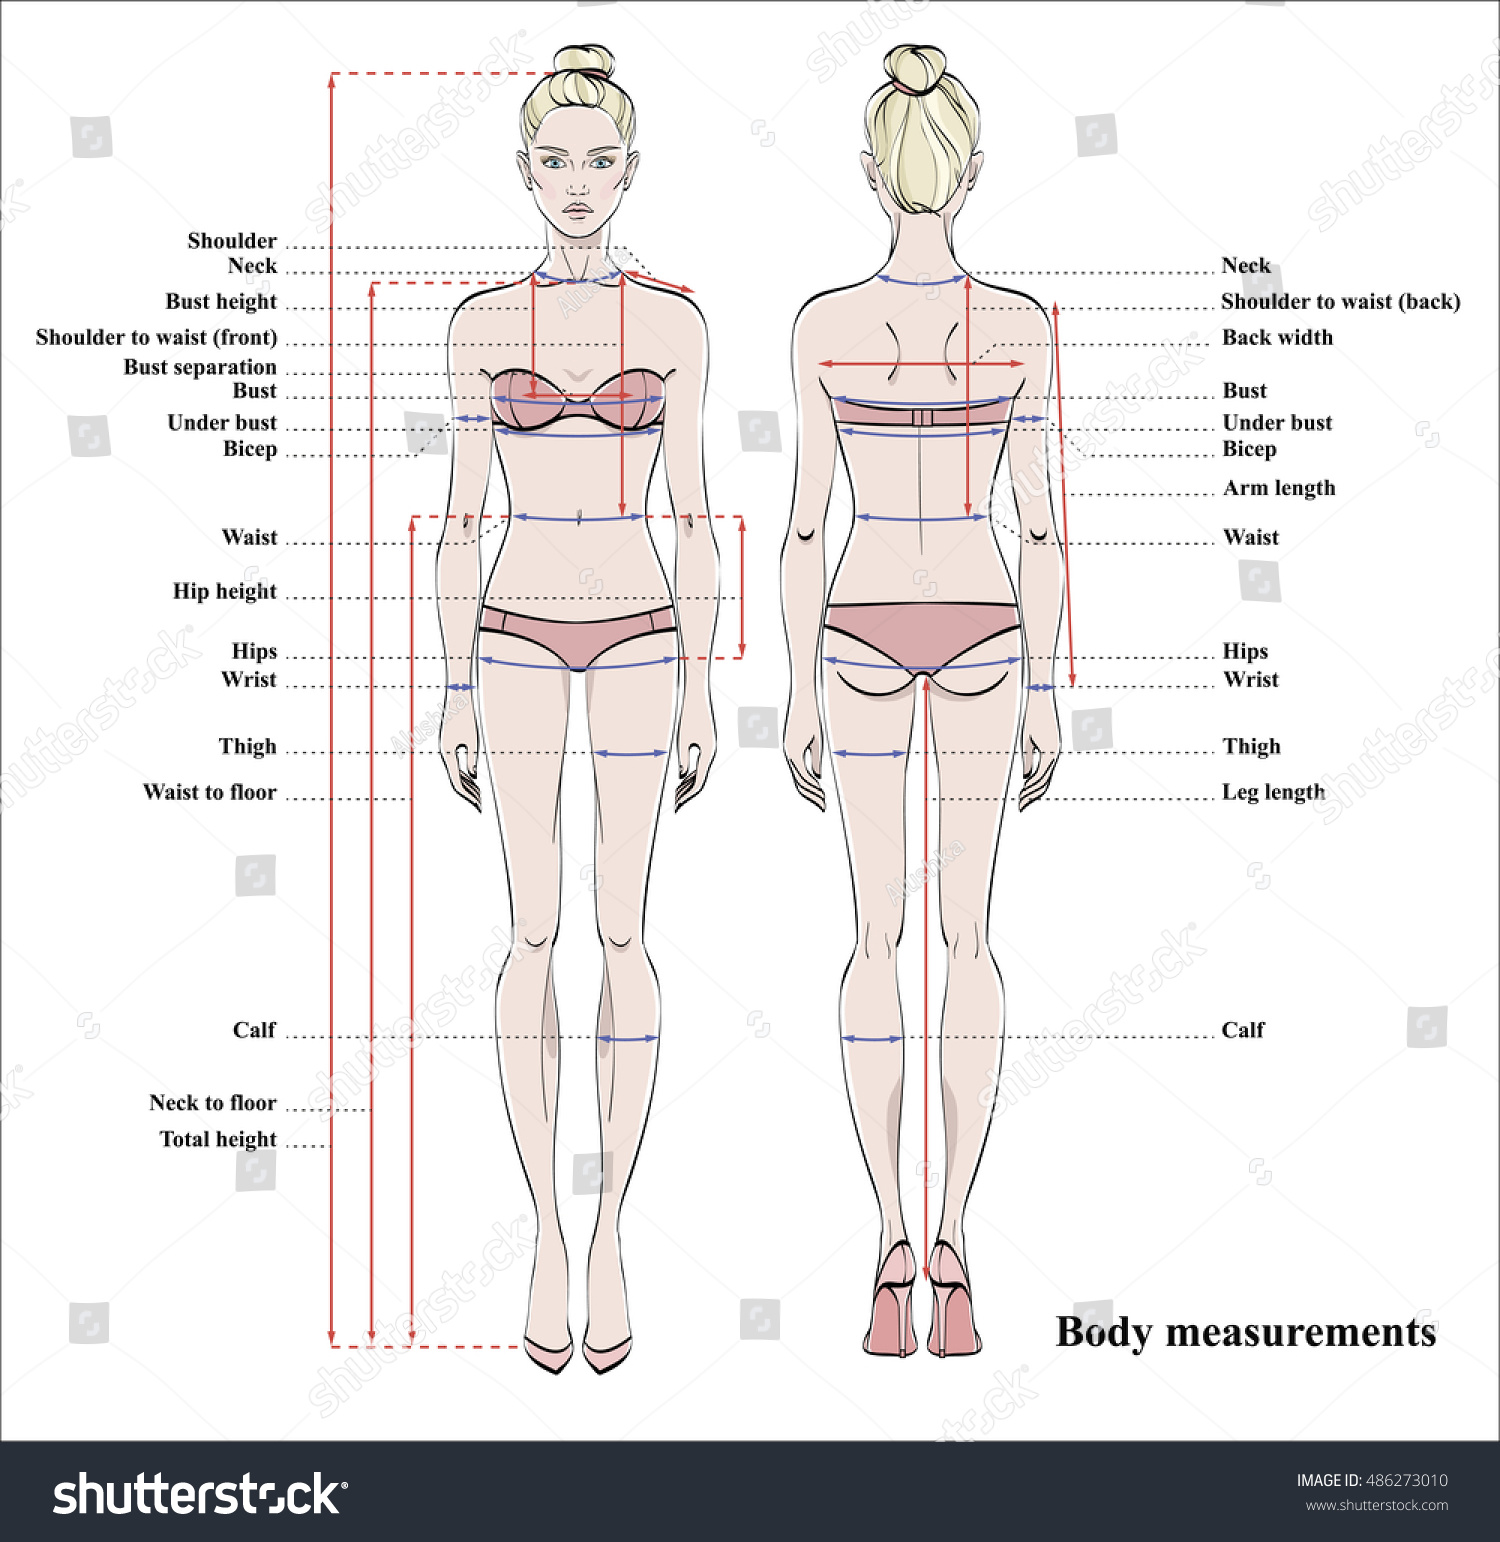 Woman Body Measurement Chart Scheme Measurement Stock Vector